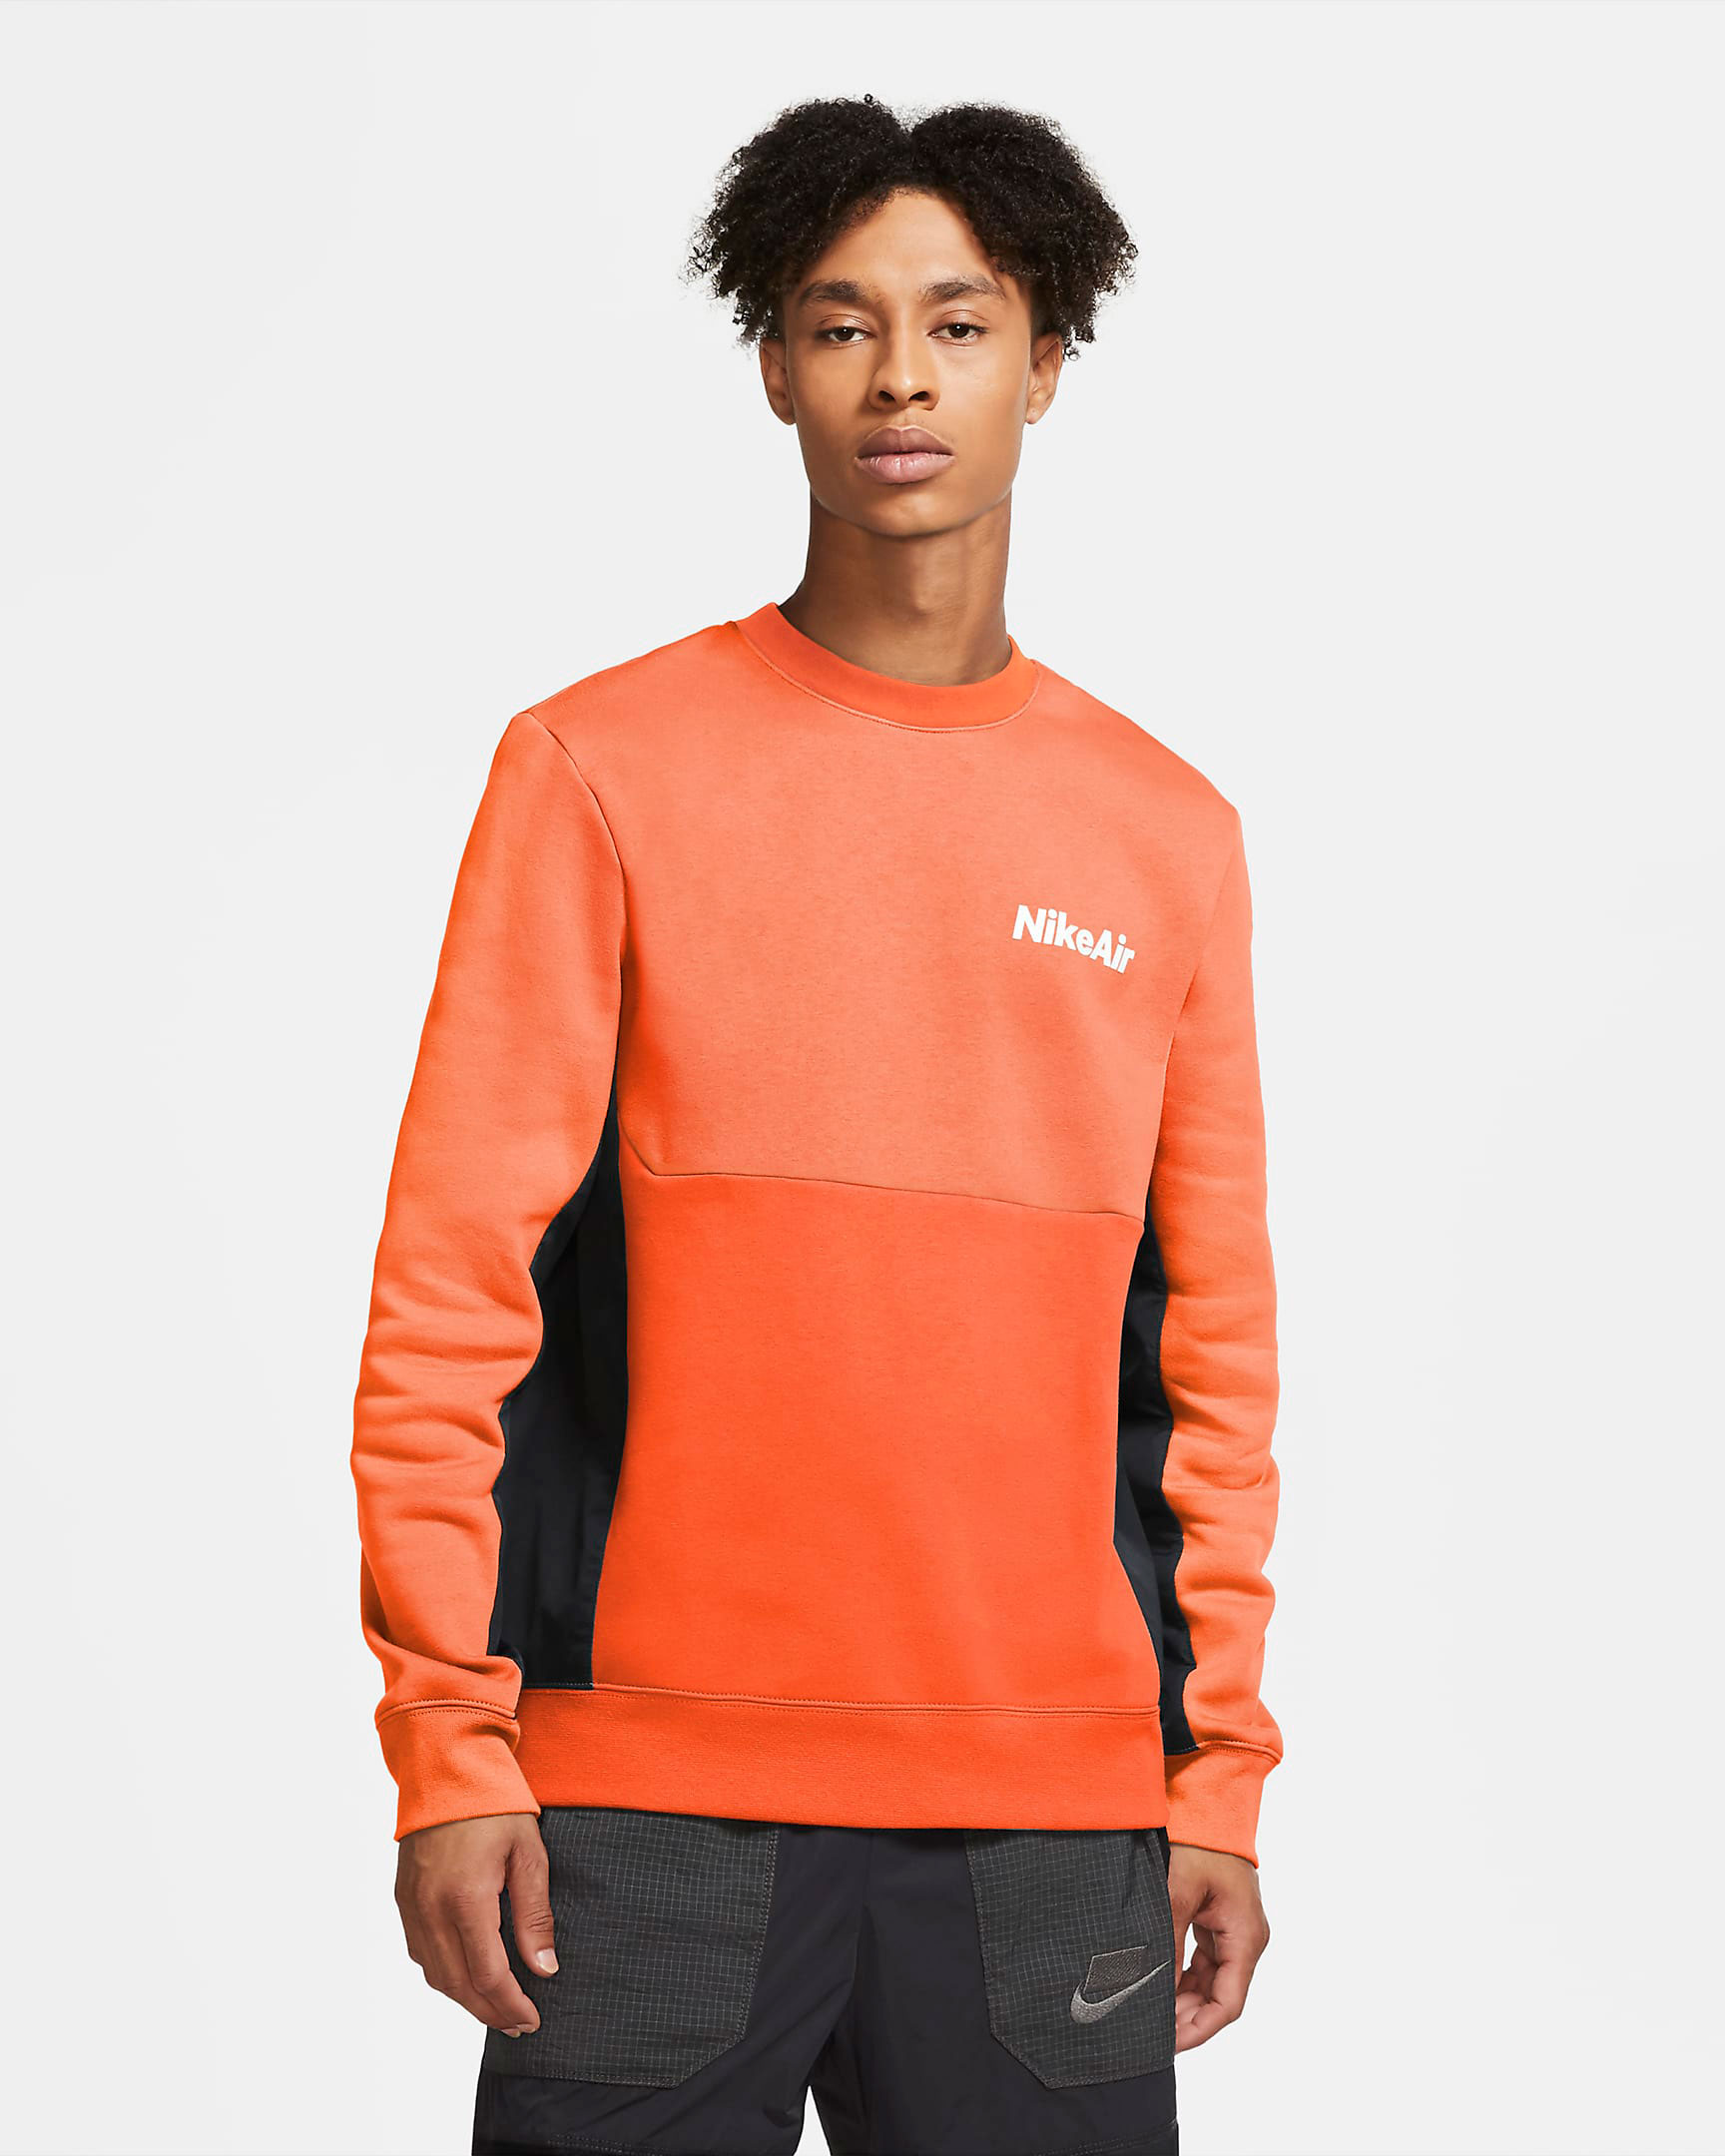 nike-air-fleece-crew-sweatshirt-orange